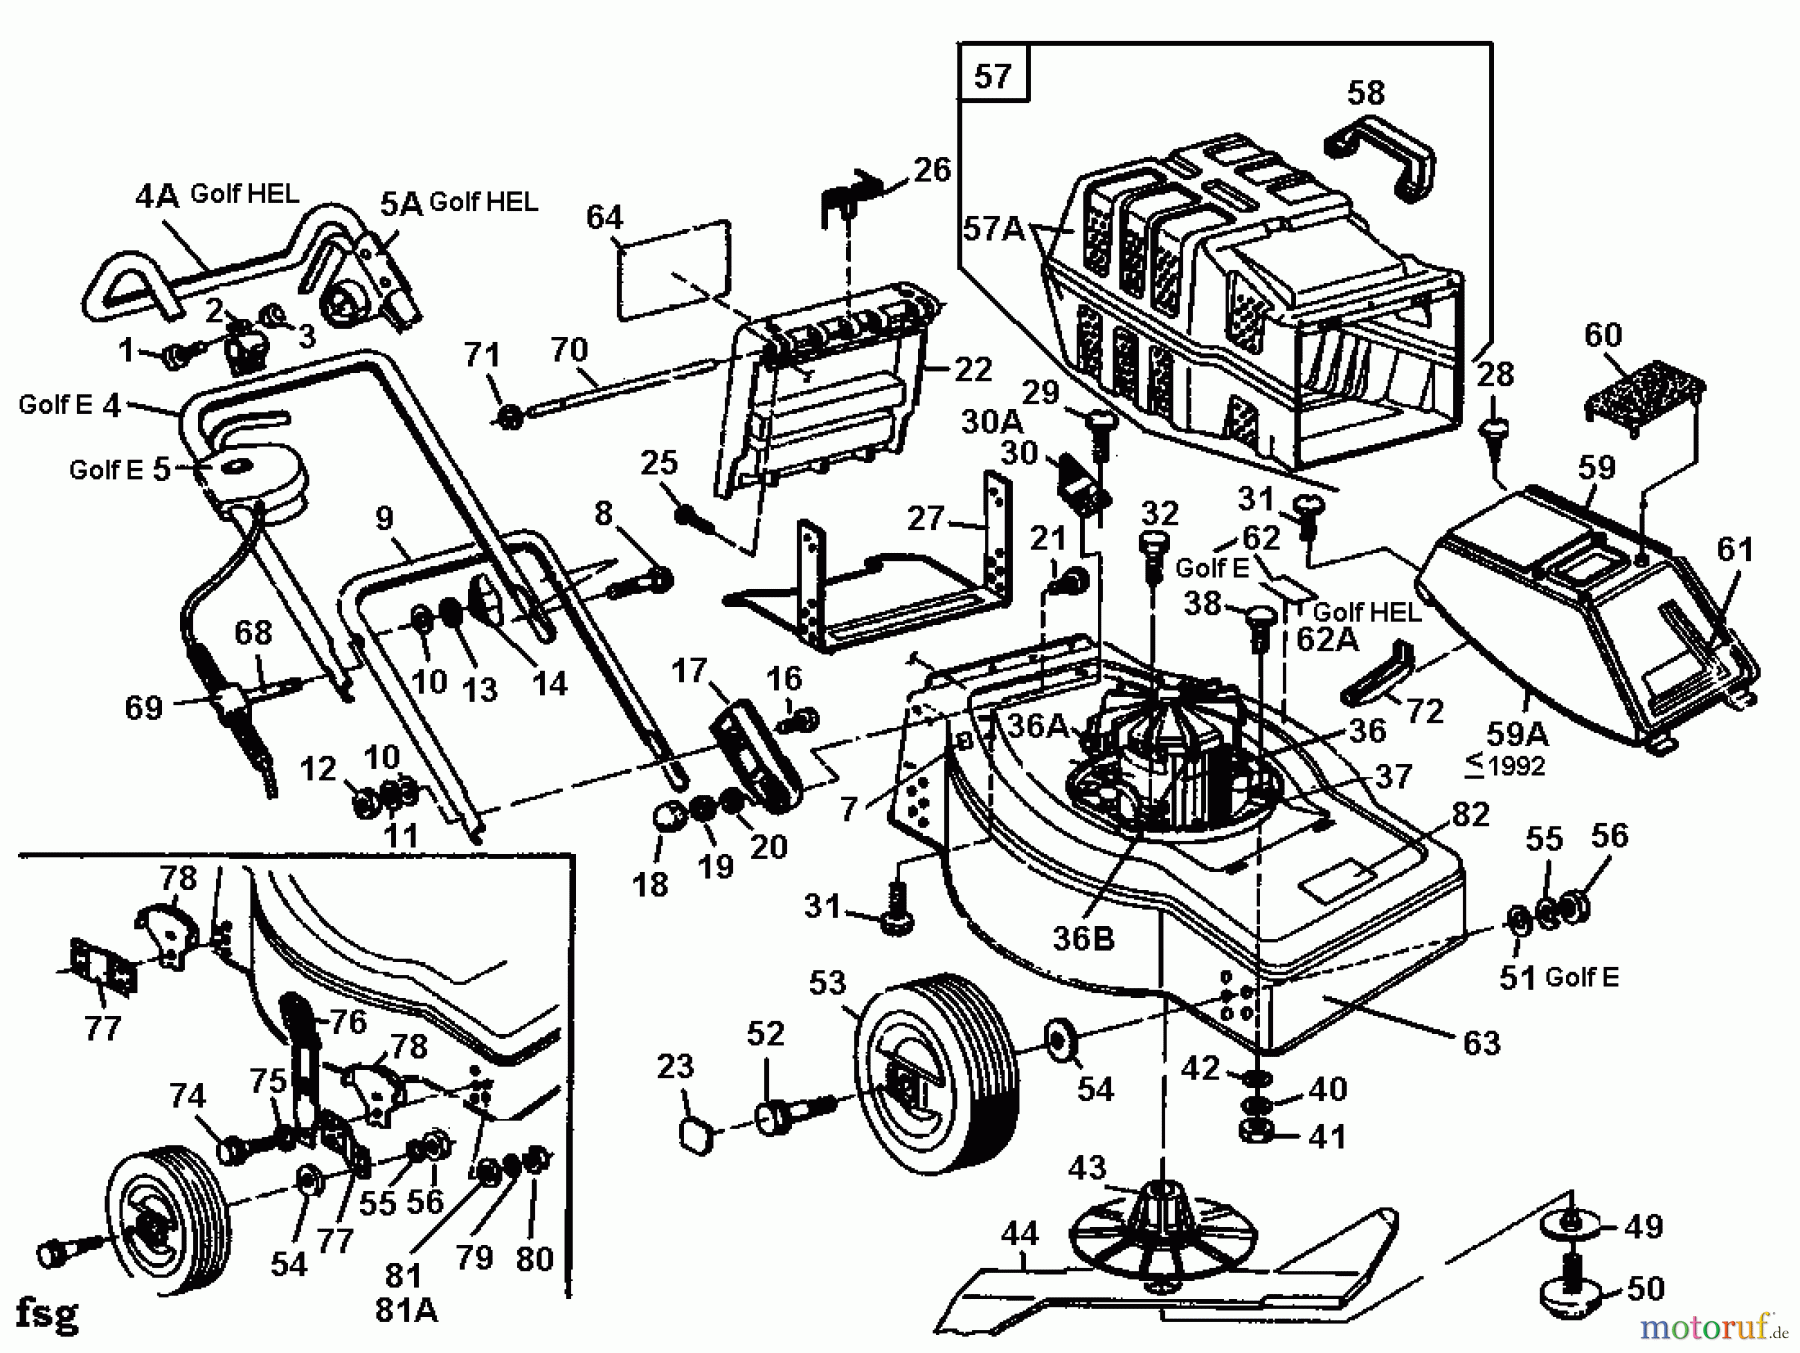  Golf Electric mower Golf E 02881.06  (1993) Basic machine